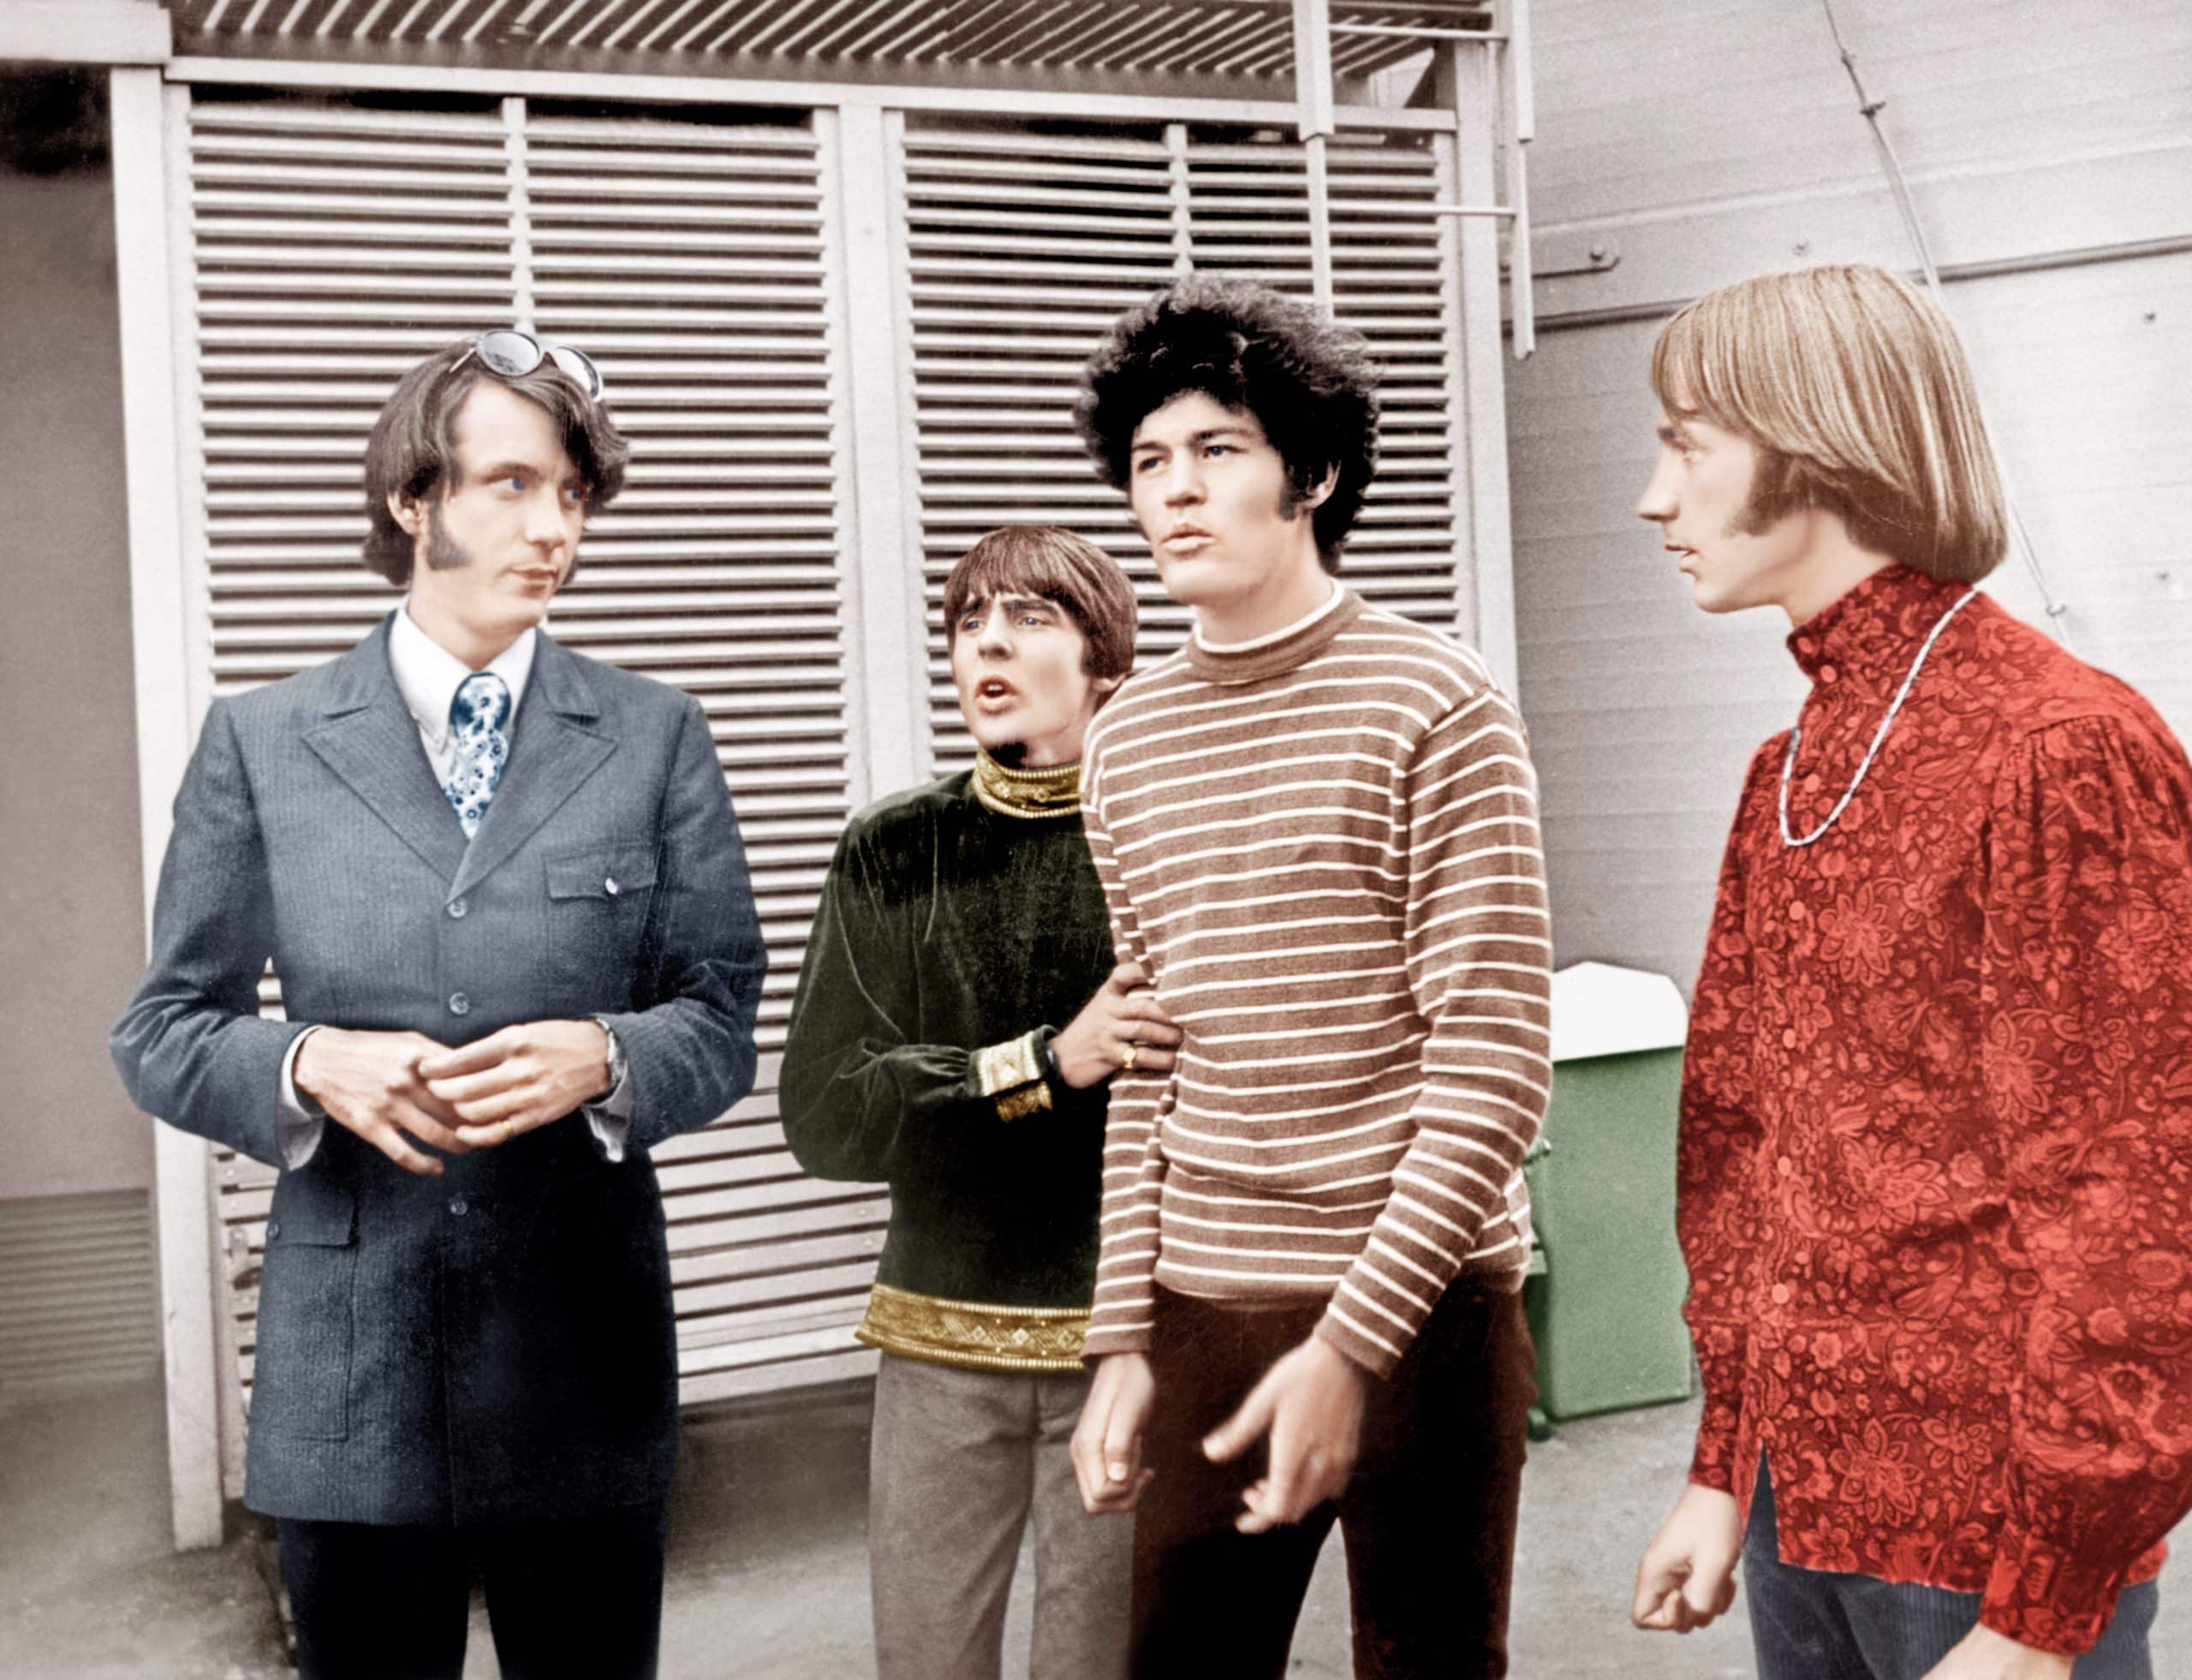 HEAD, from left: Michael Nesmith, Davy Jones, Micky Dolenz, Peter Tork, (aka The Monkees), 1968